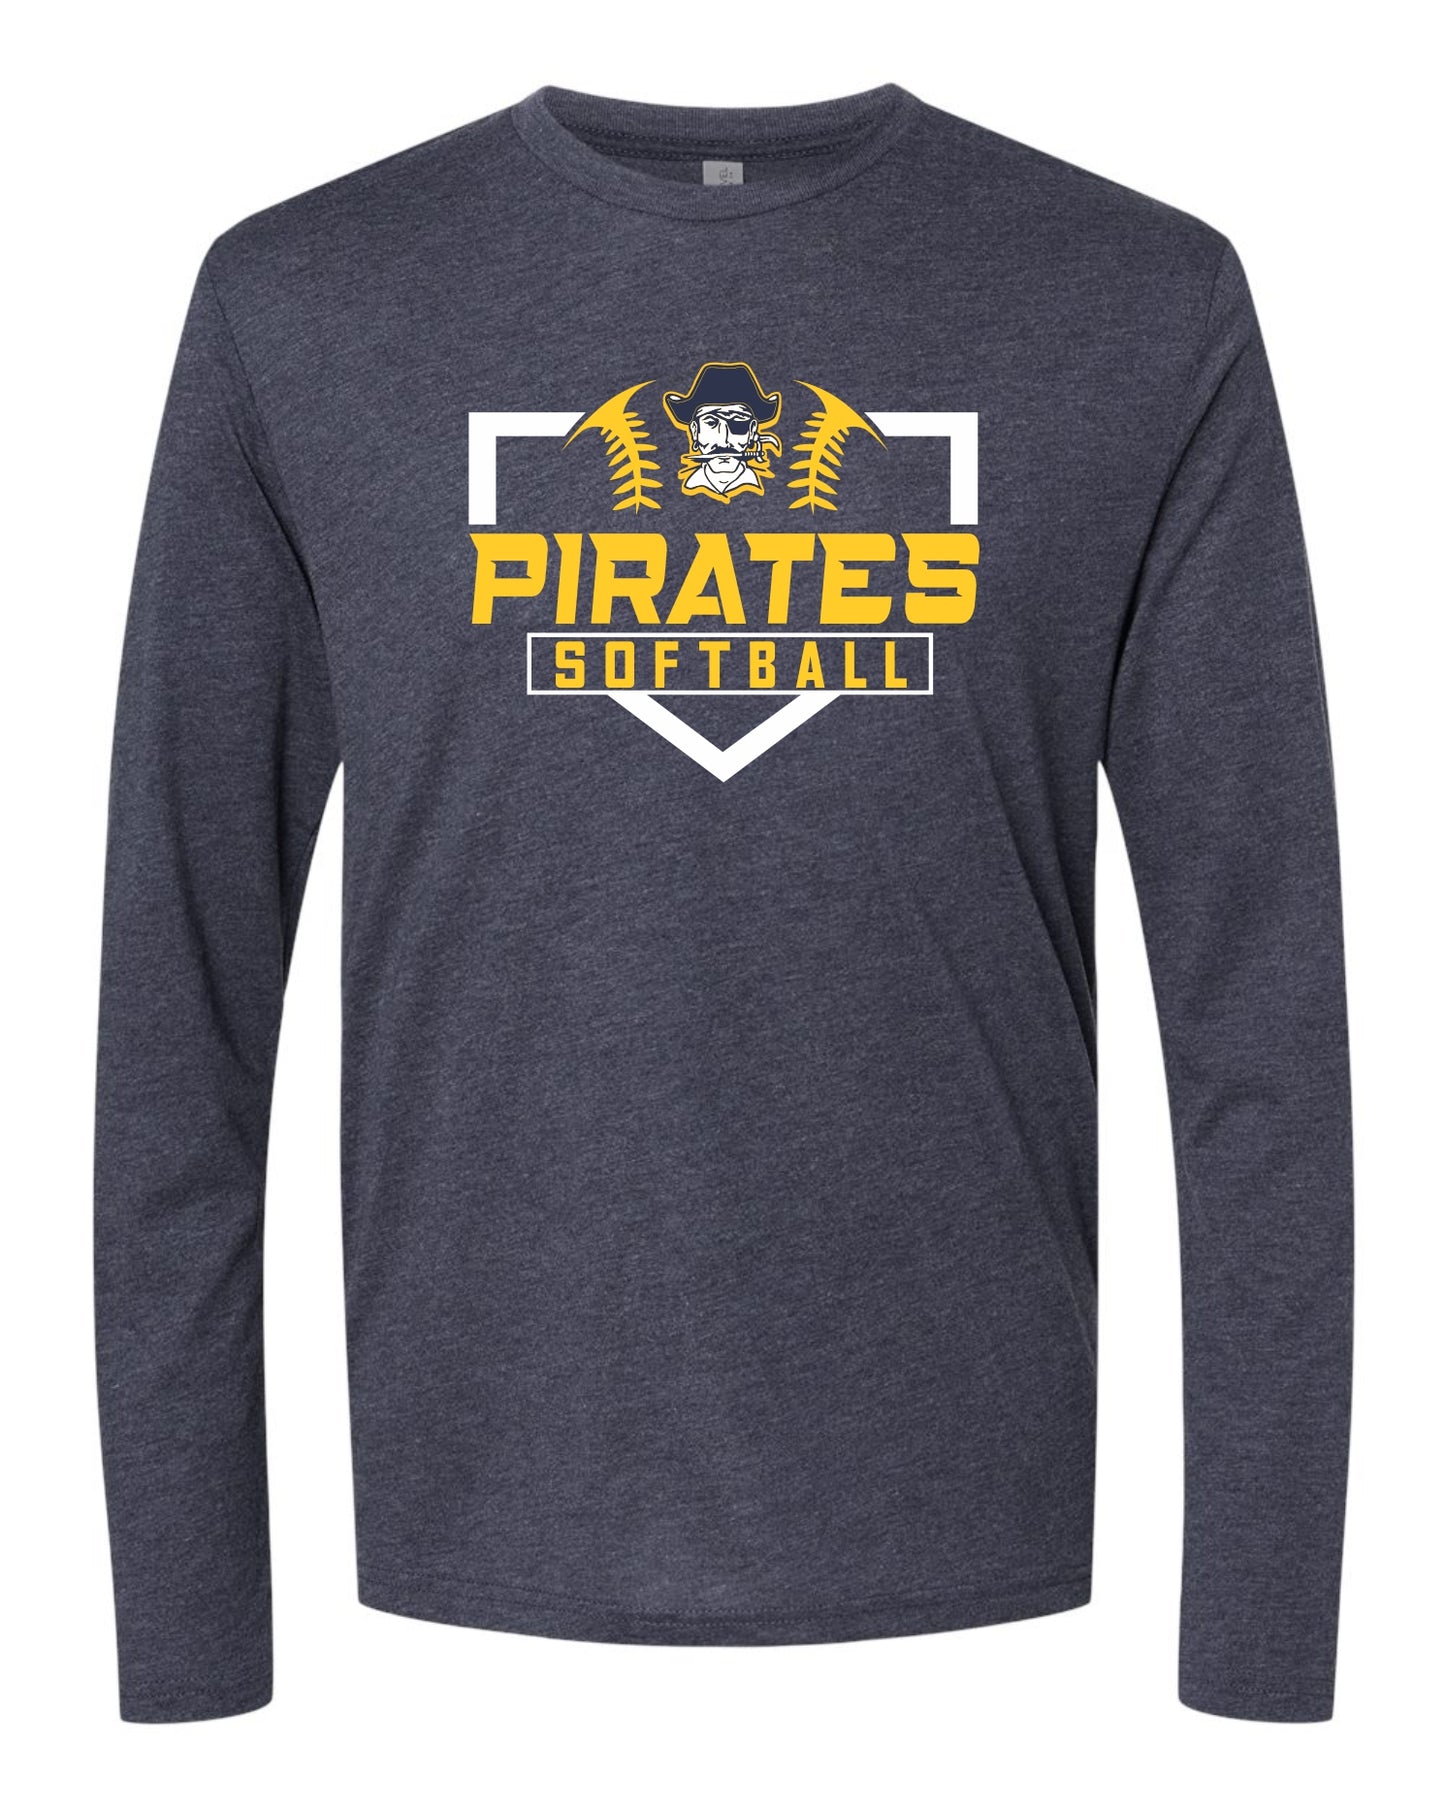 Pirate Softball -- Long Sleeve Shirt